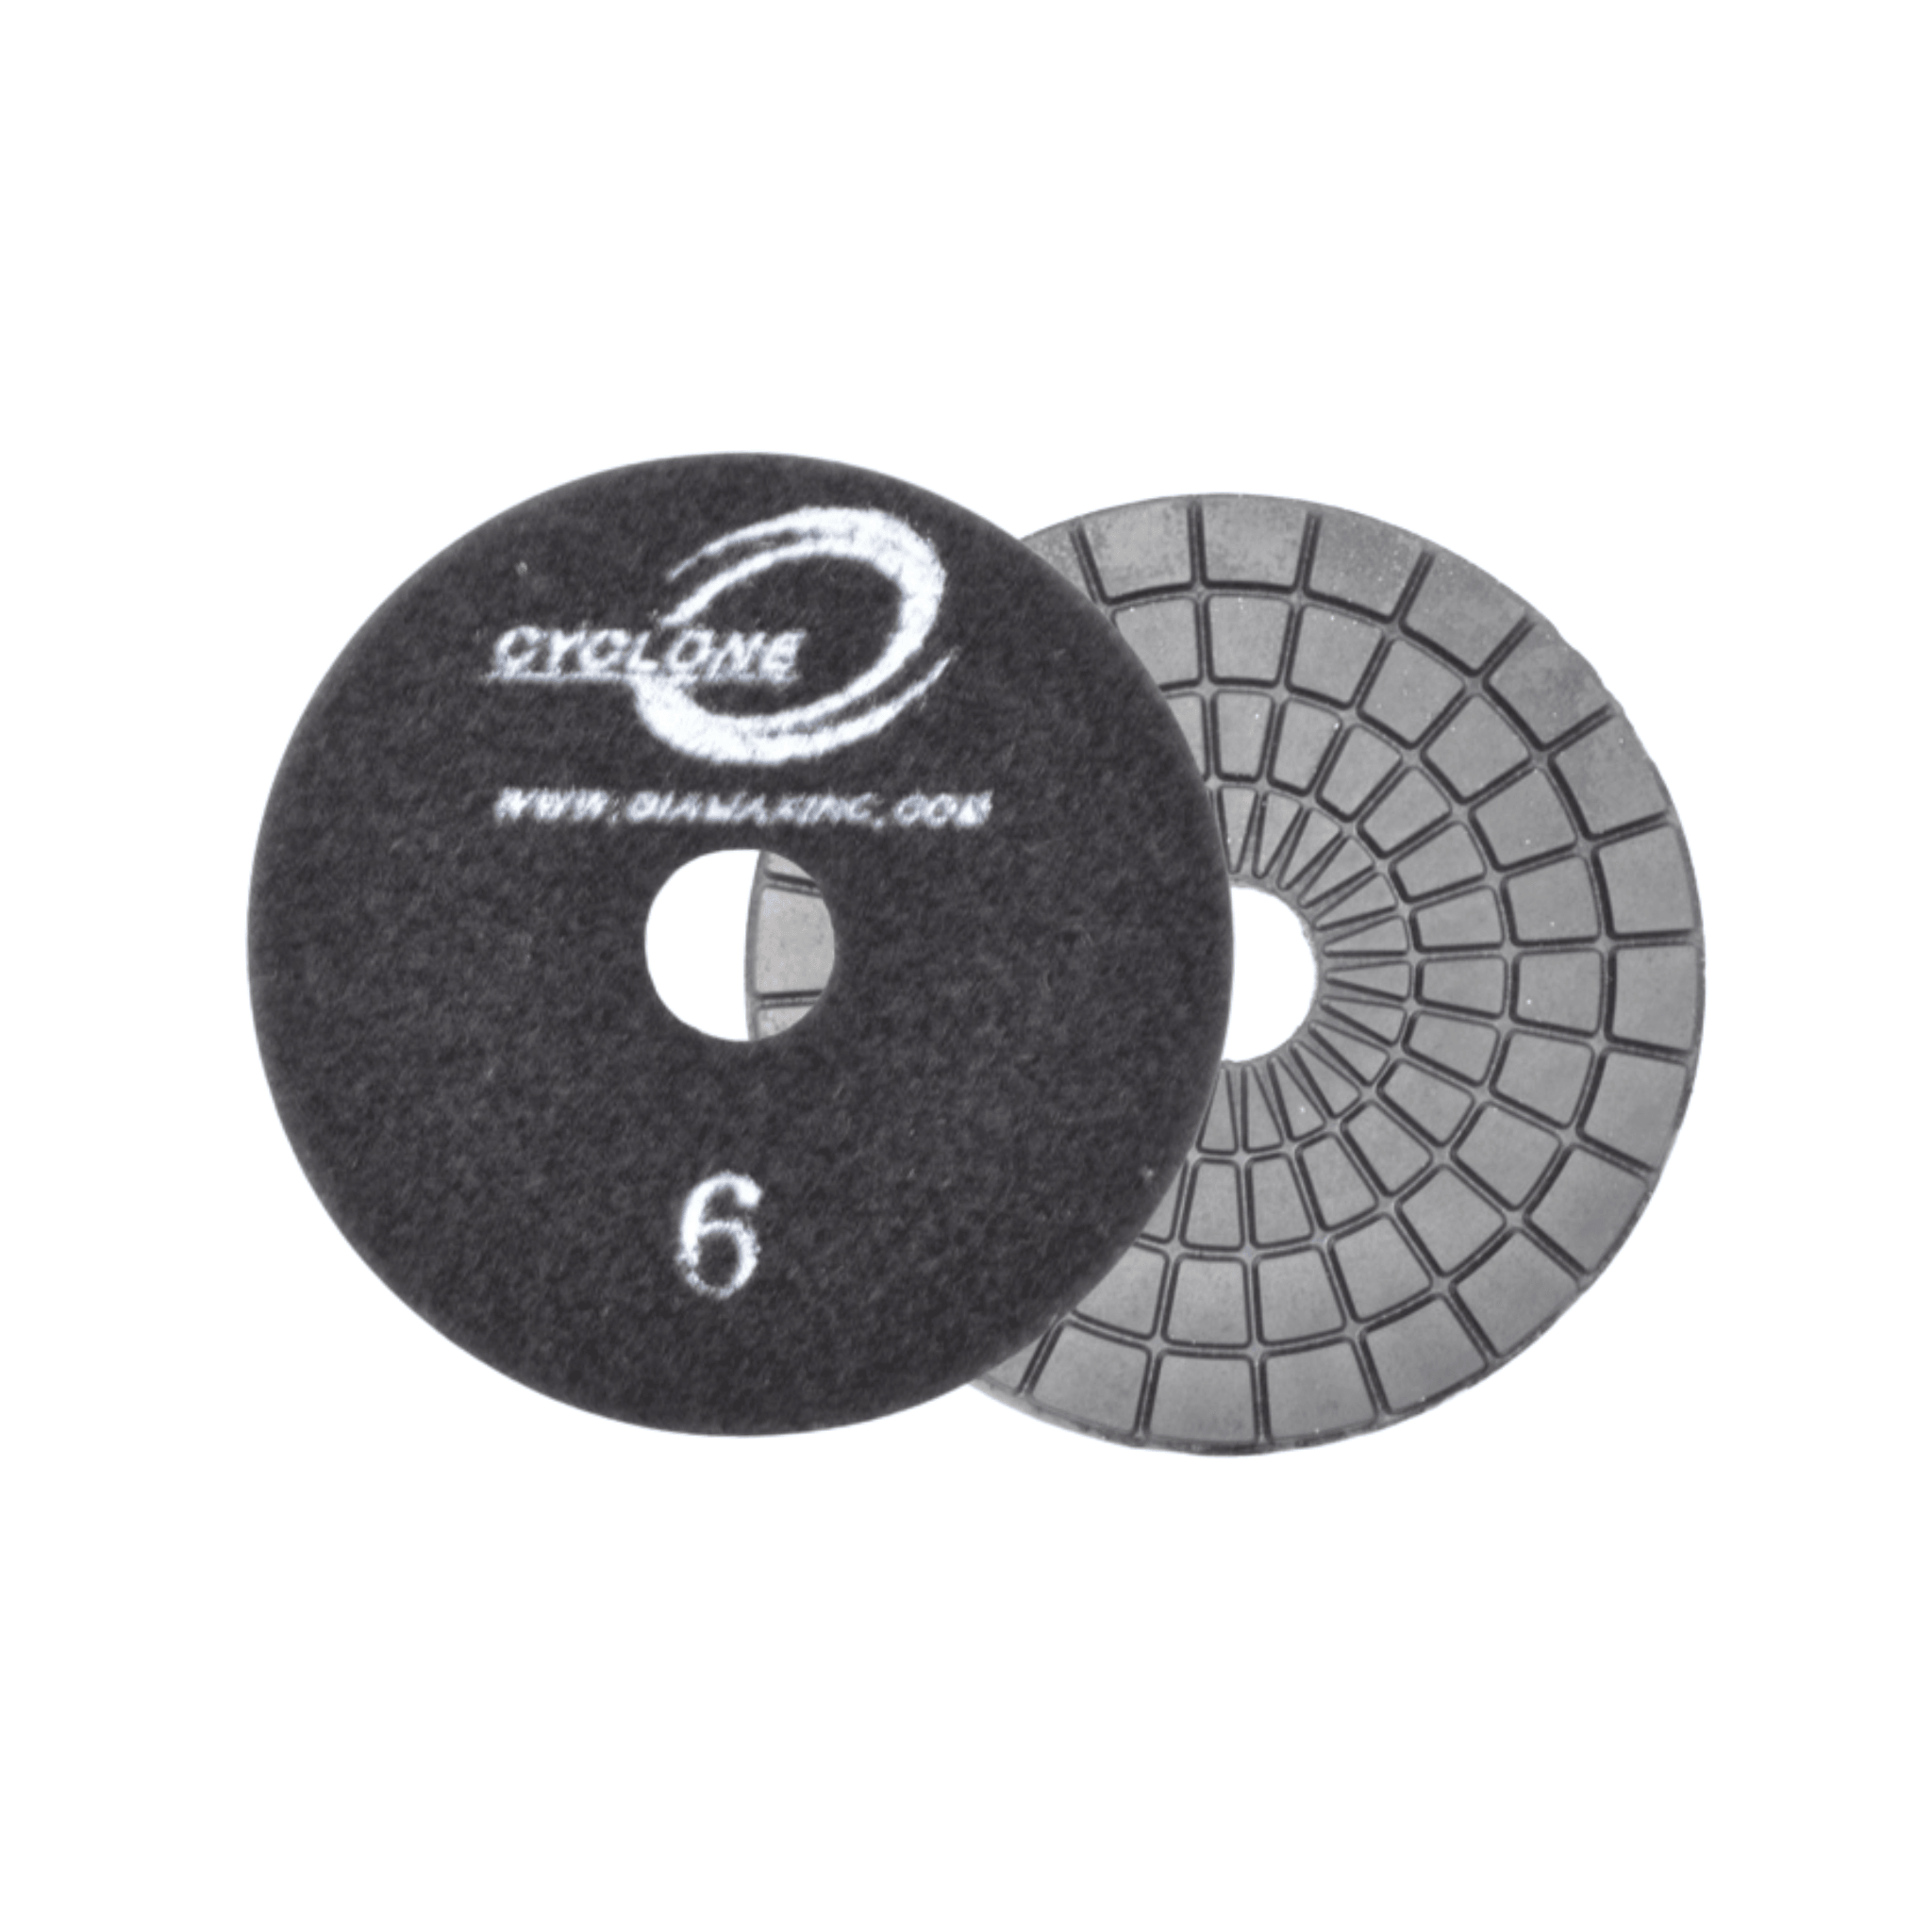 Cyclone Resin Snail Lock Pad #6 - Direct Stone Tool Supply, Inc